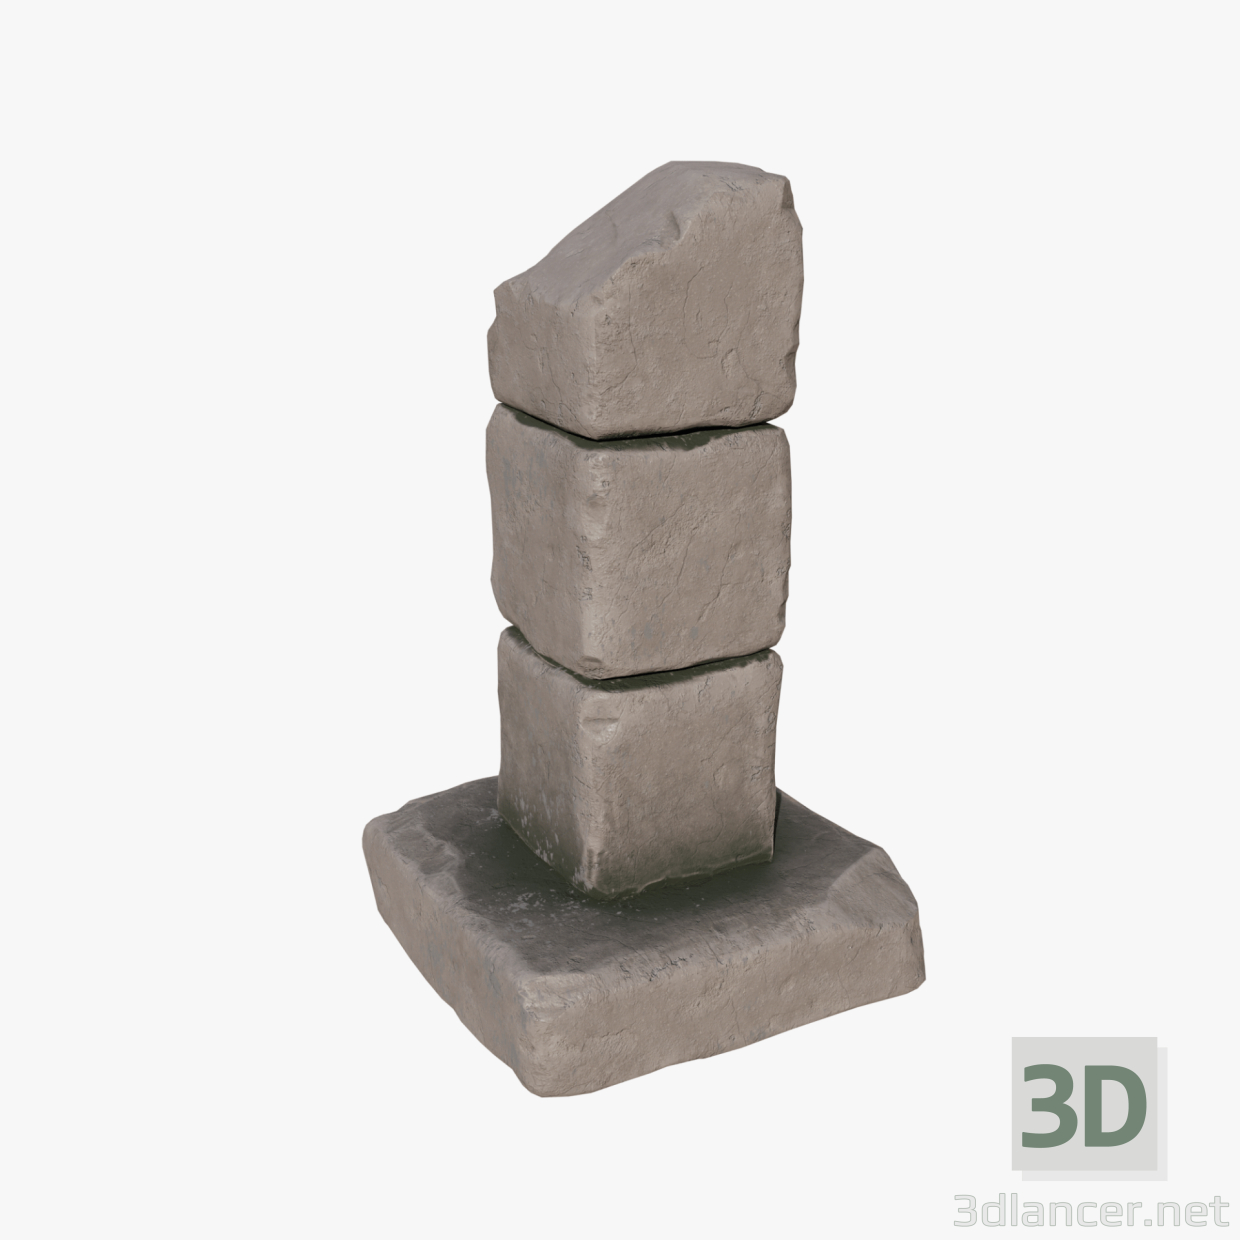 Gebrochene Säule 3D-Modell kaufen - Rendern